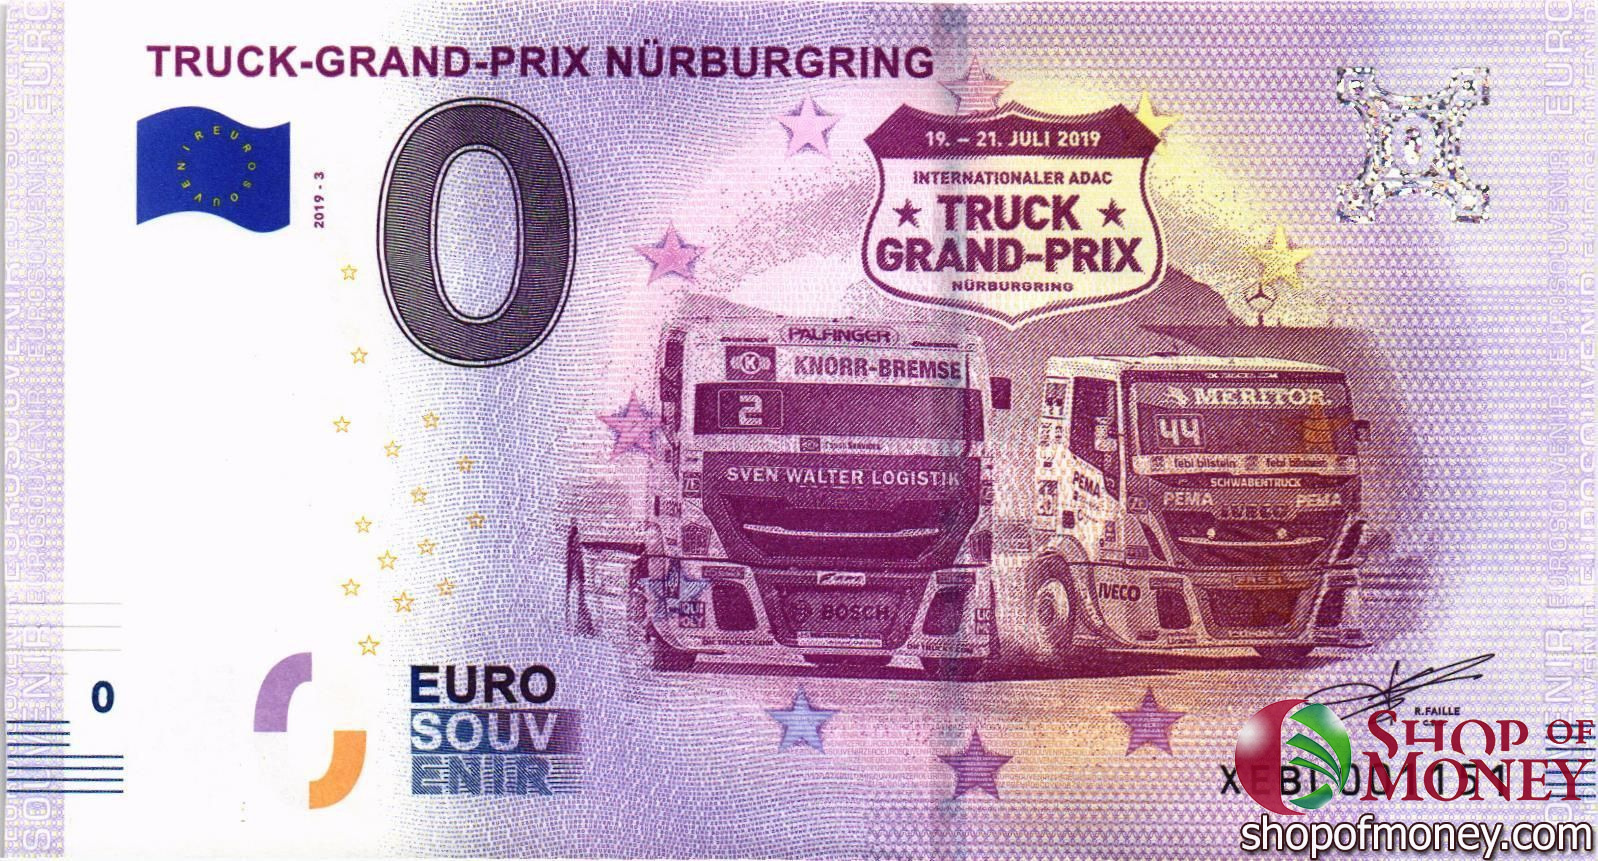 TRUCK-GRAND-PRIX NURBURGRING 0 ЕВРО